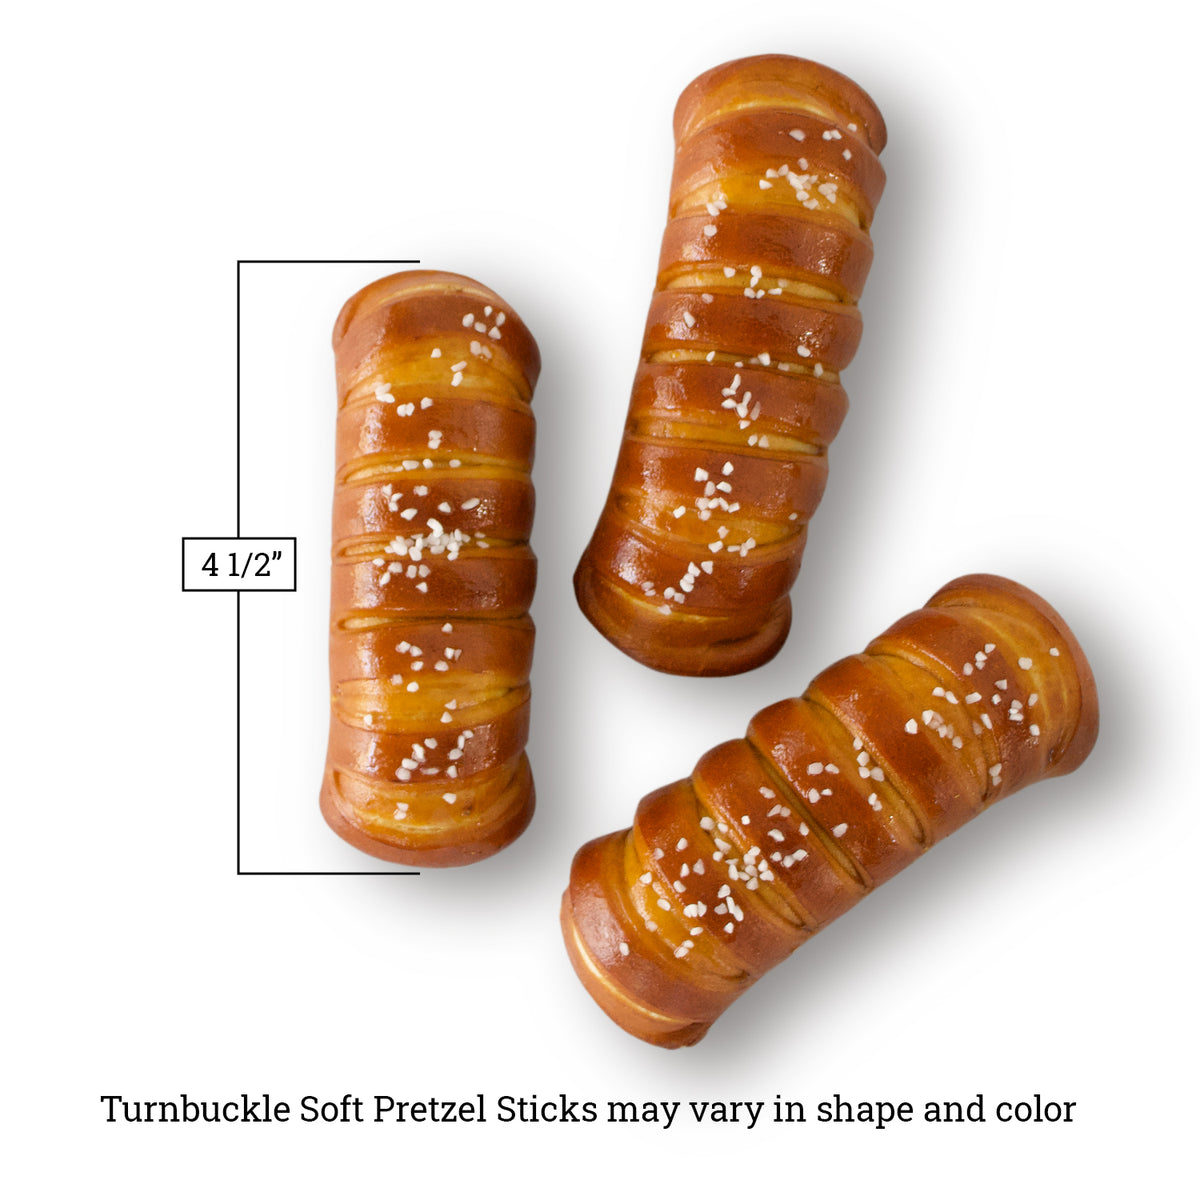 Turnbuckle Soft Pretzel Sticks